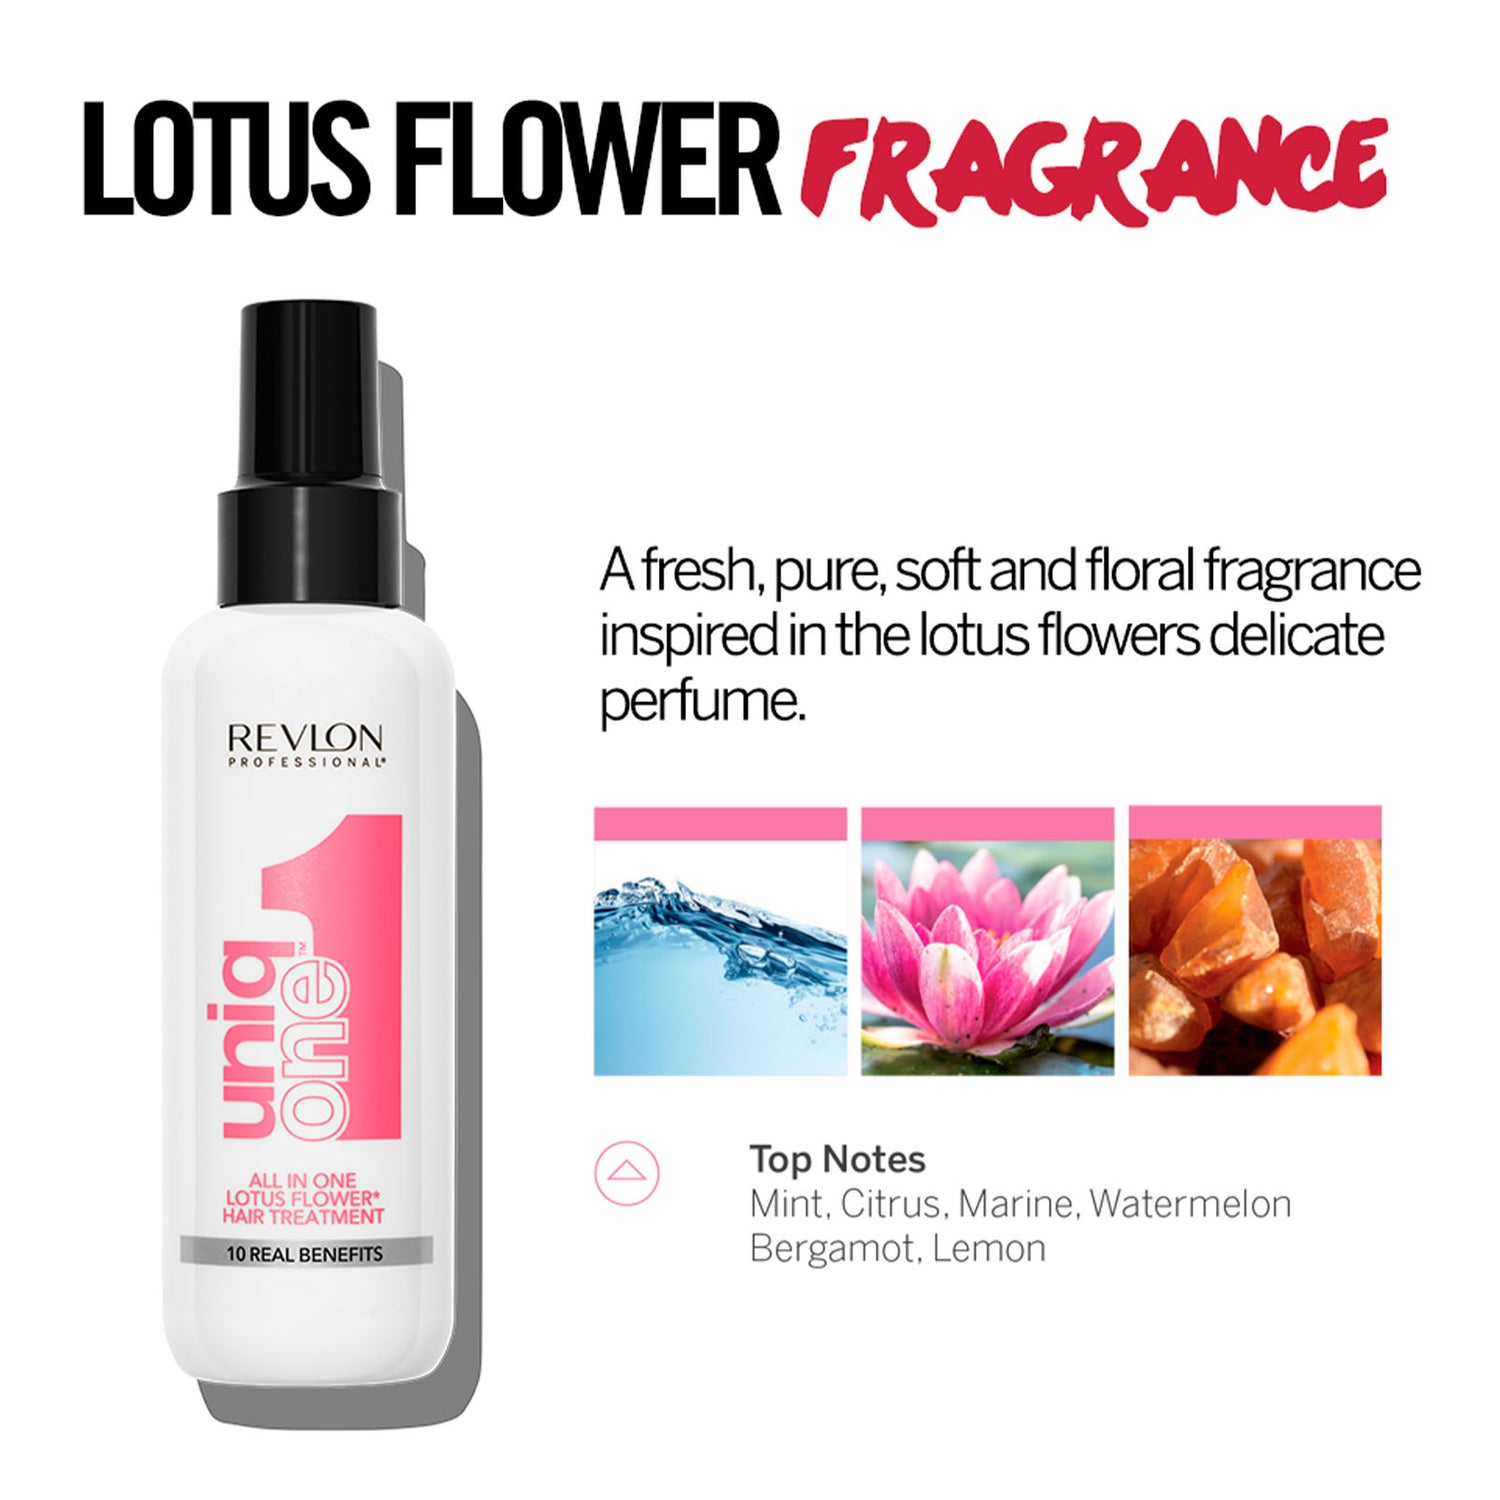 Uniqone Hair Treatment Lotus Flower 5 oz.